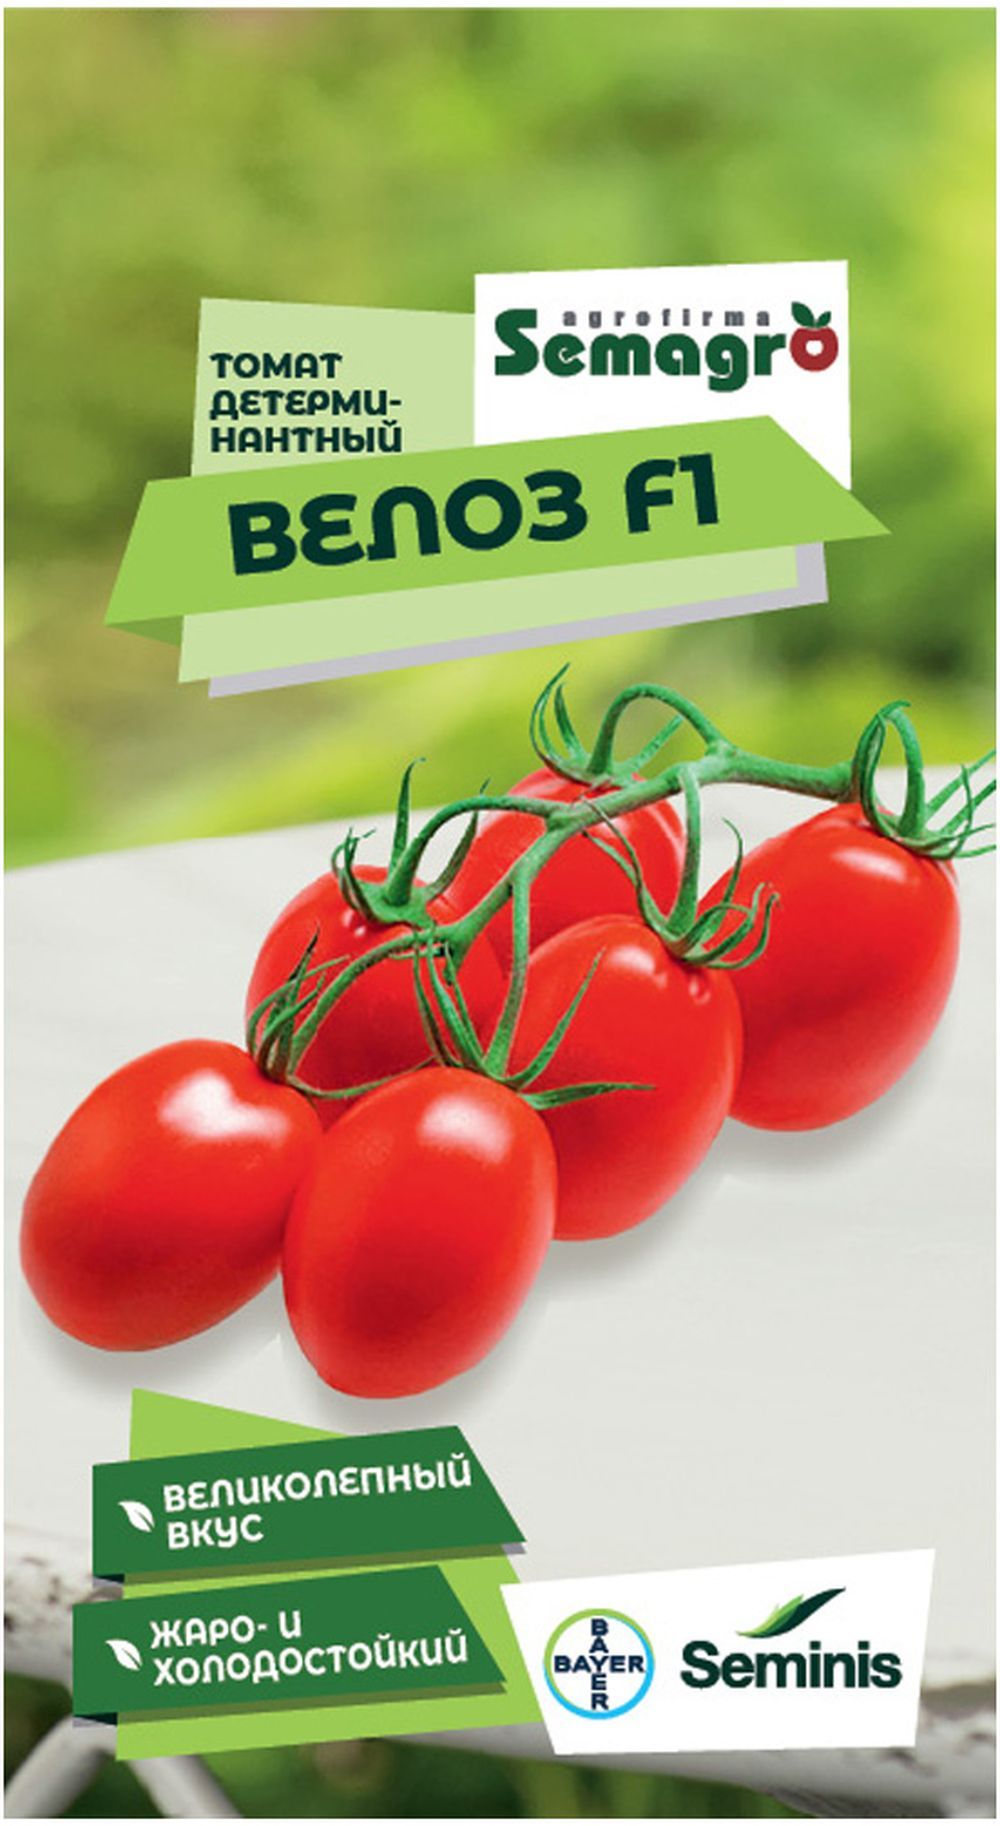 Мерлен семена томатов. Томат Велоз f1 описание и отзывы. Томаты Велоз f1 отзывы.